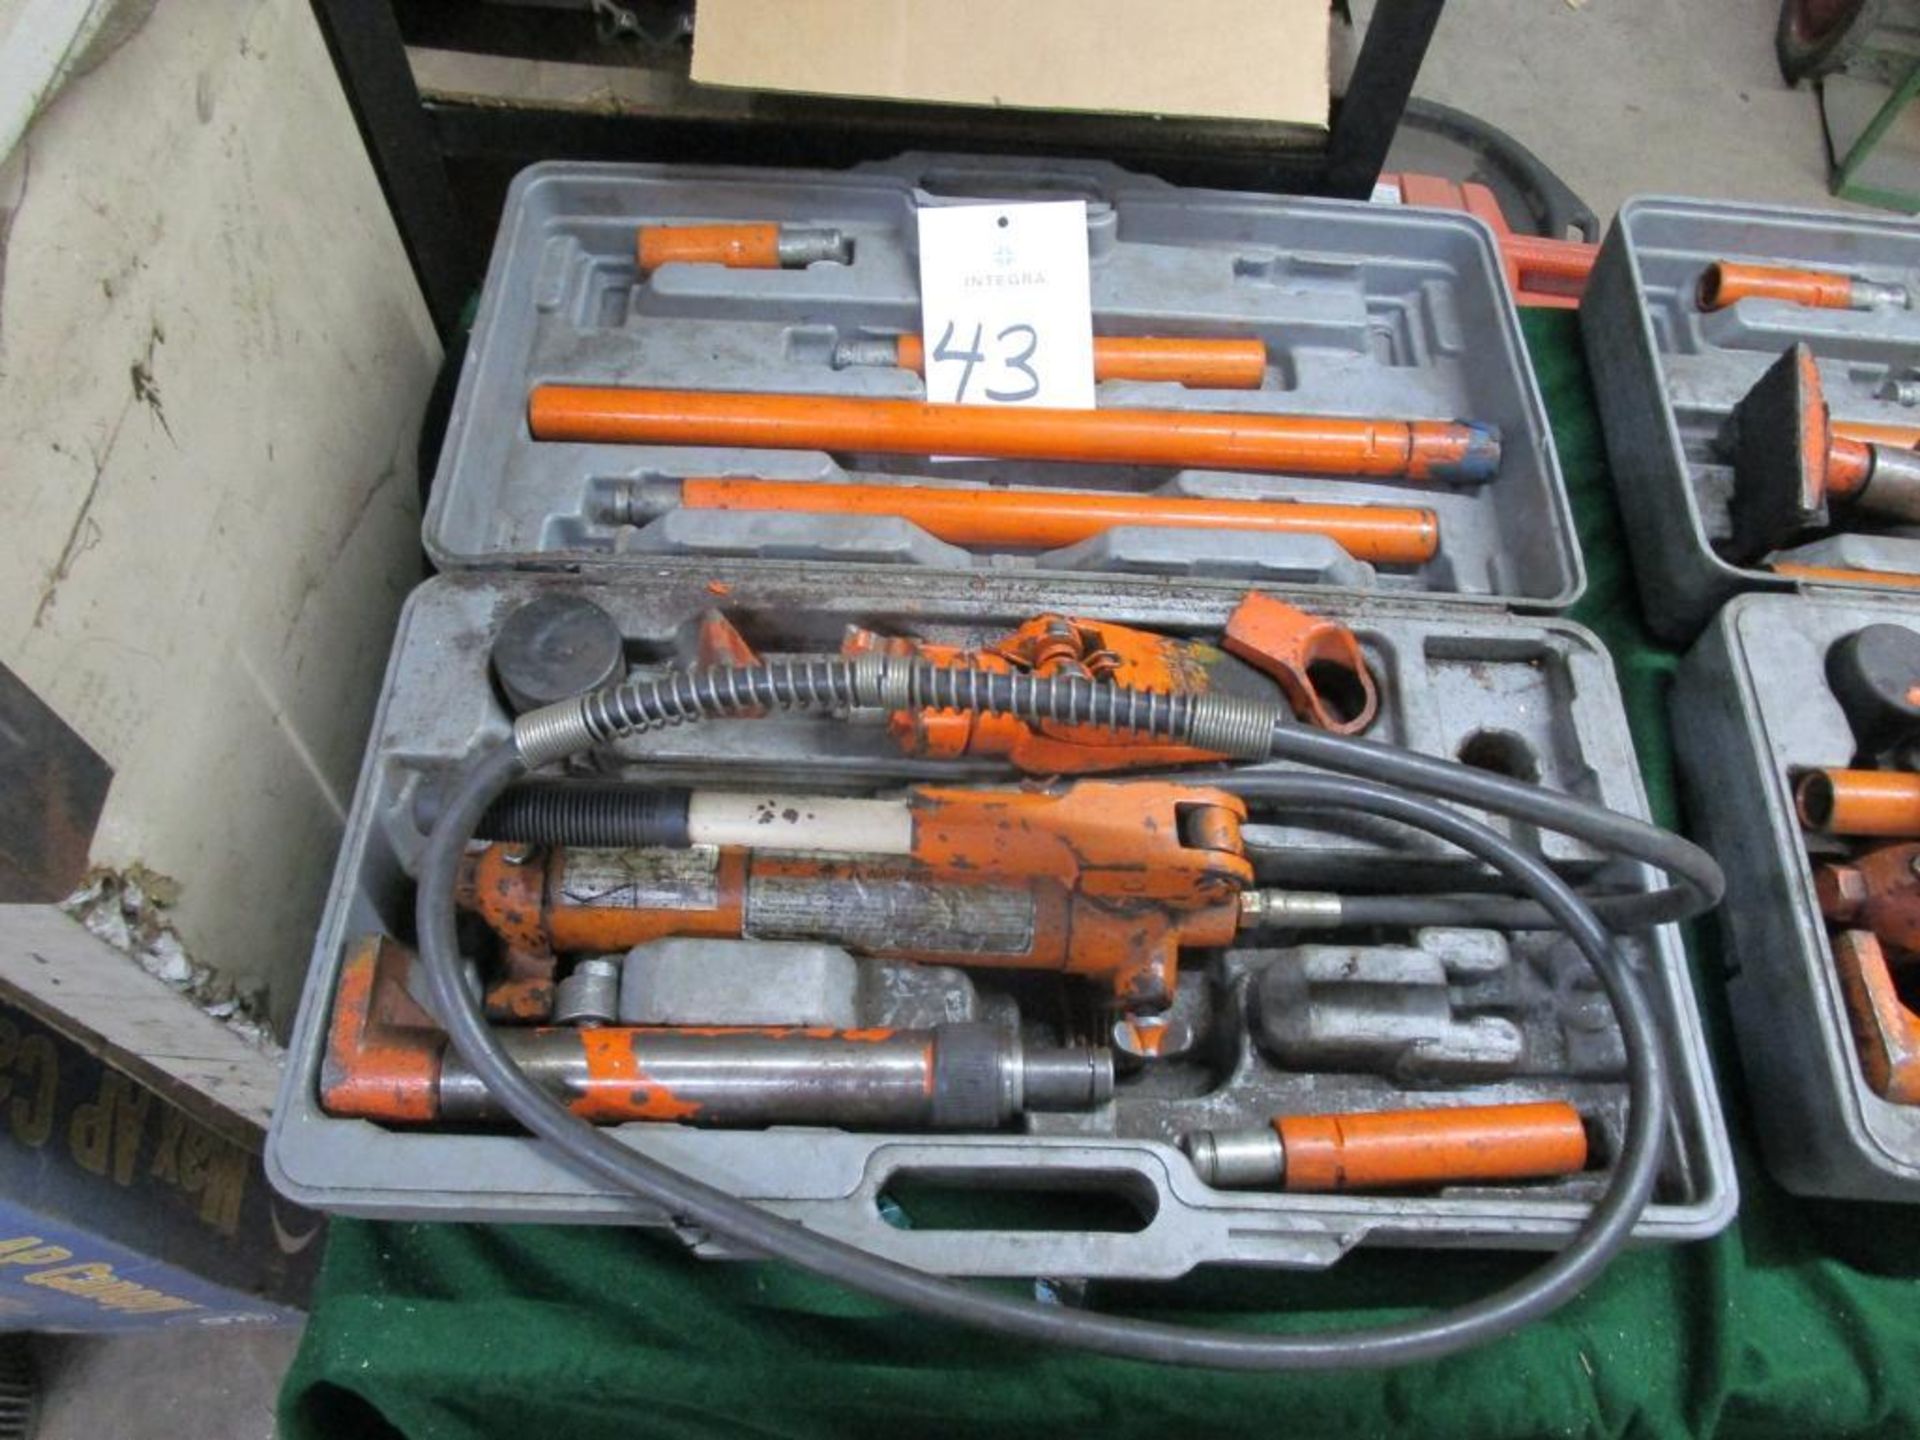 Central Hydraulics 44899 Portable Hydraulic Equipment Kit